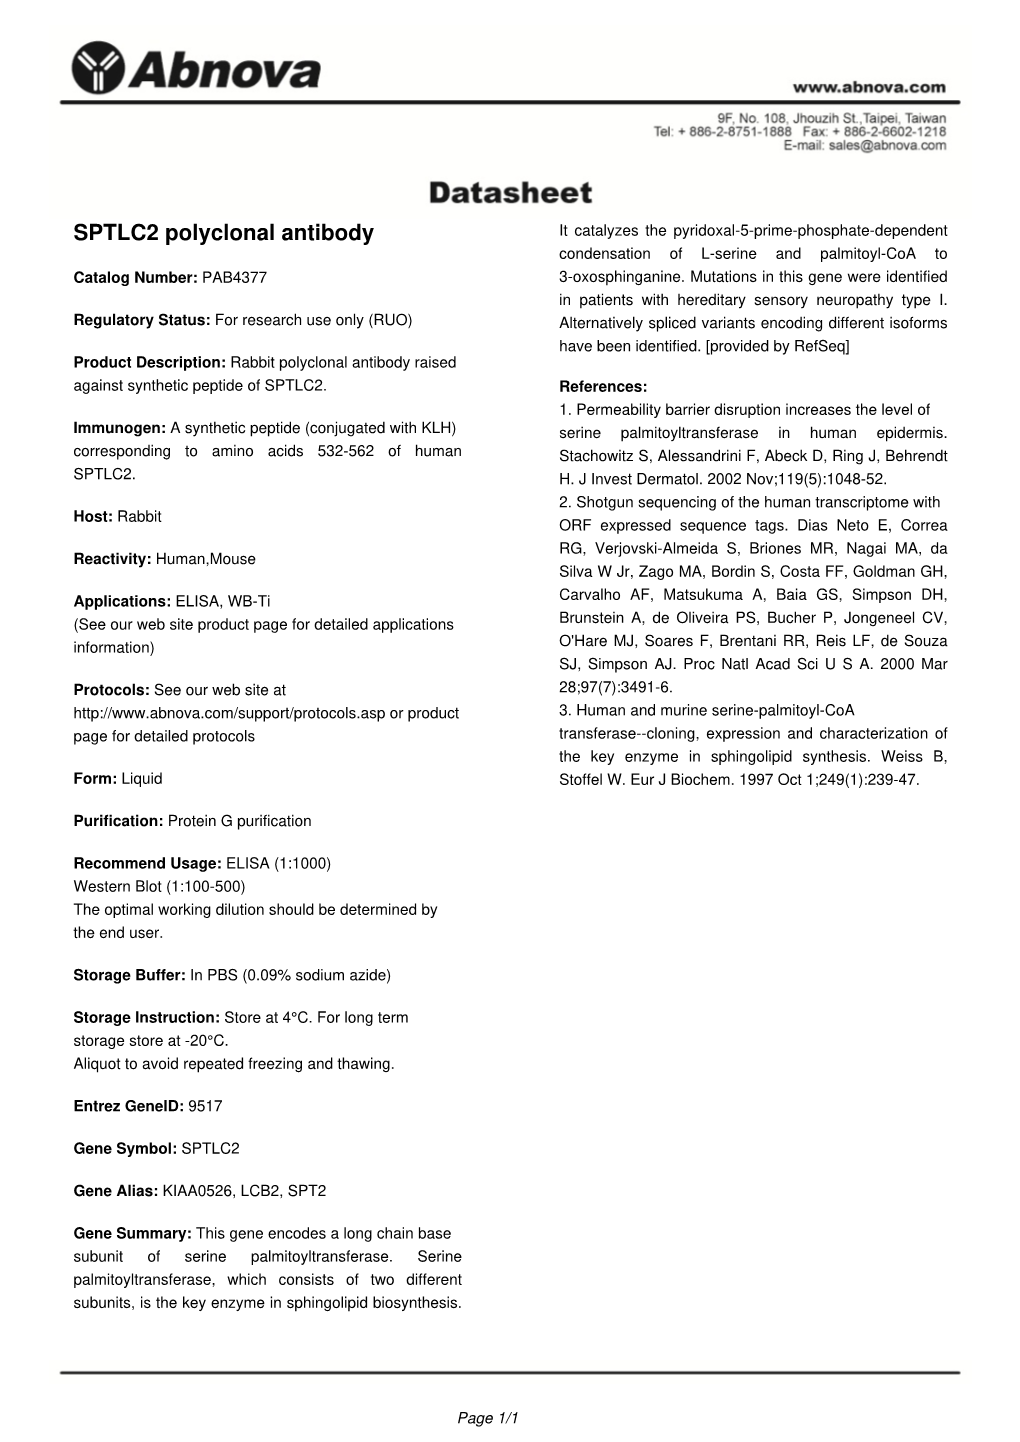 SPTLC2 Polyclonal Antibody